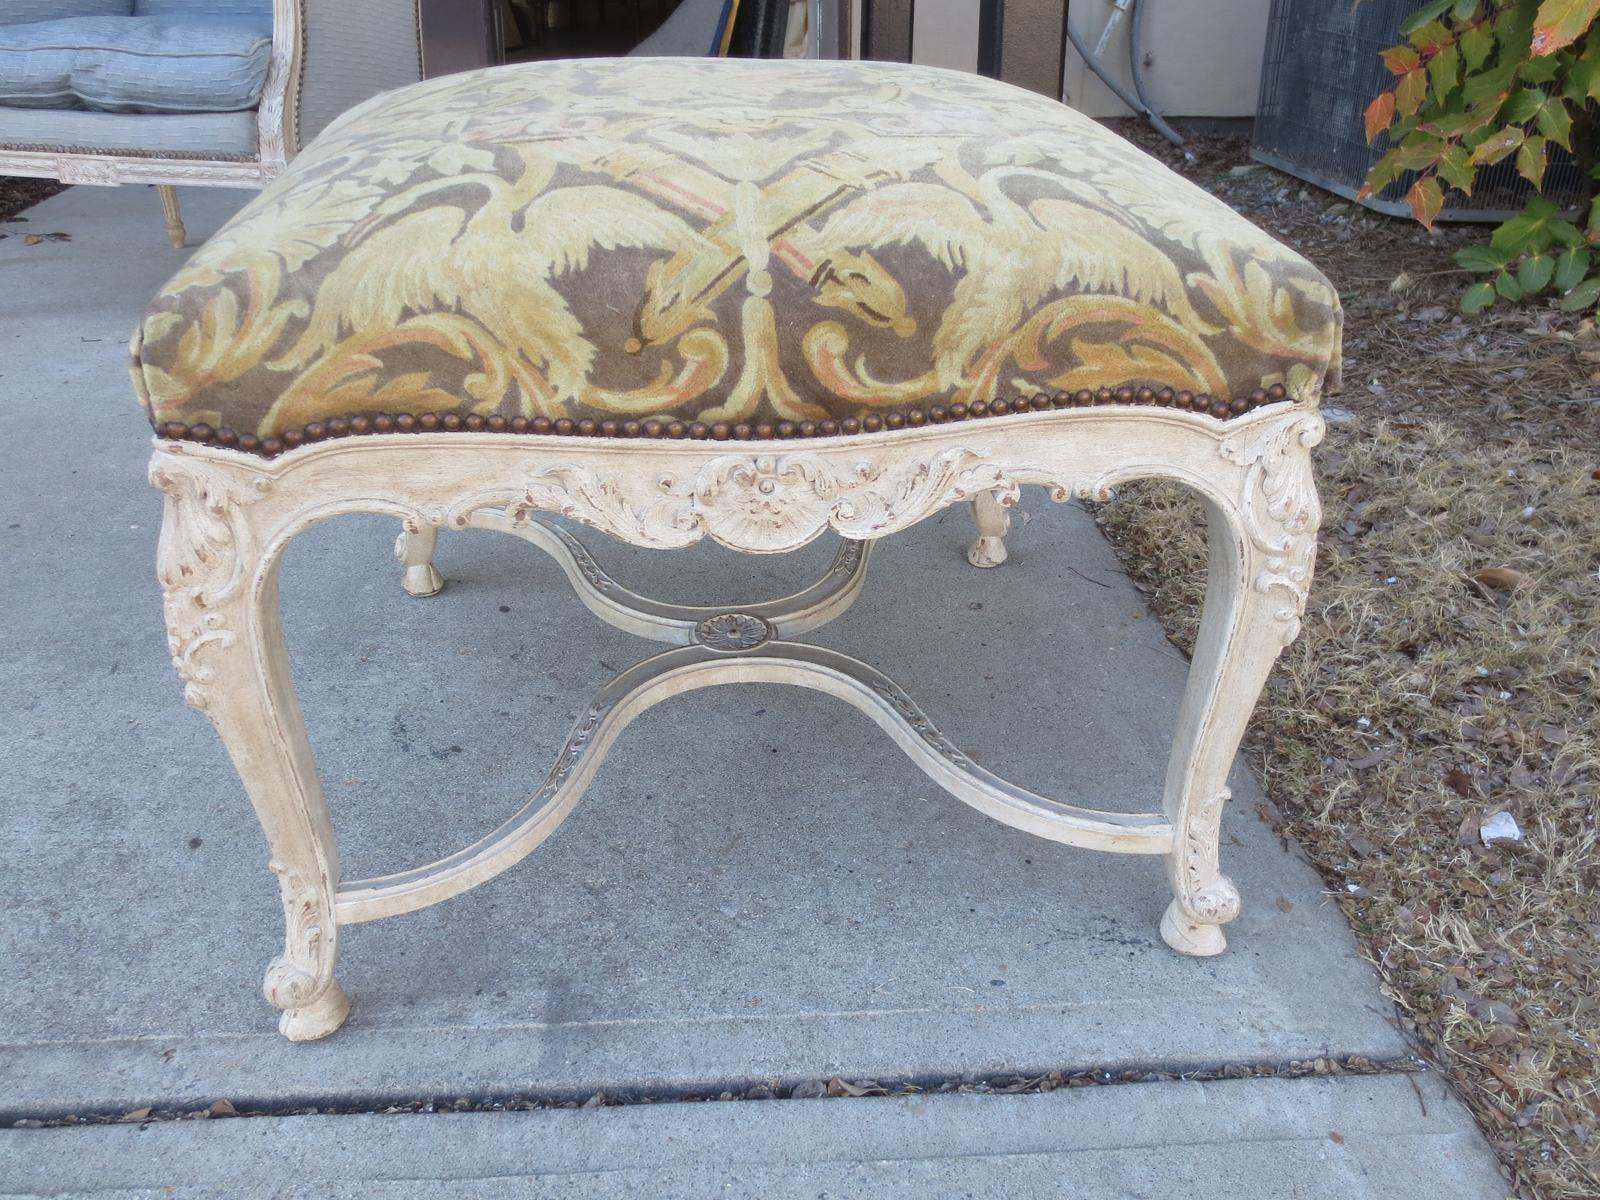 19th century Regence style custom painted stool / bench / tabouret.